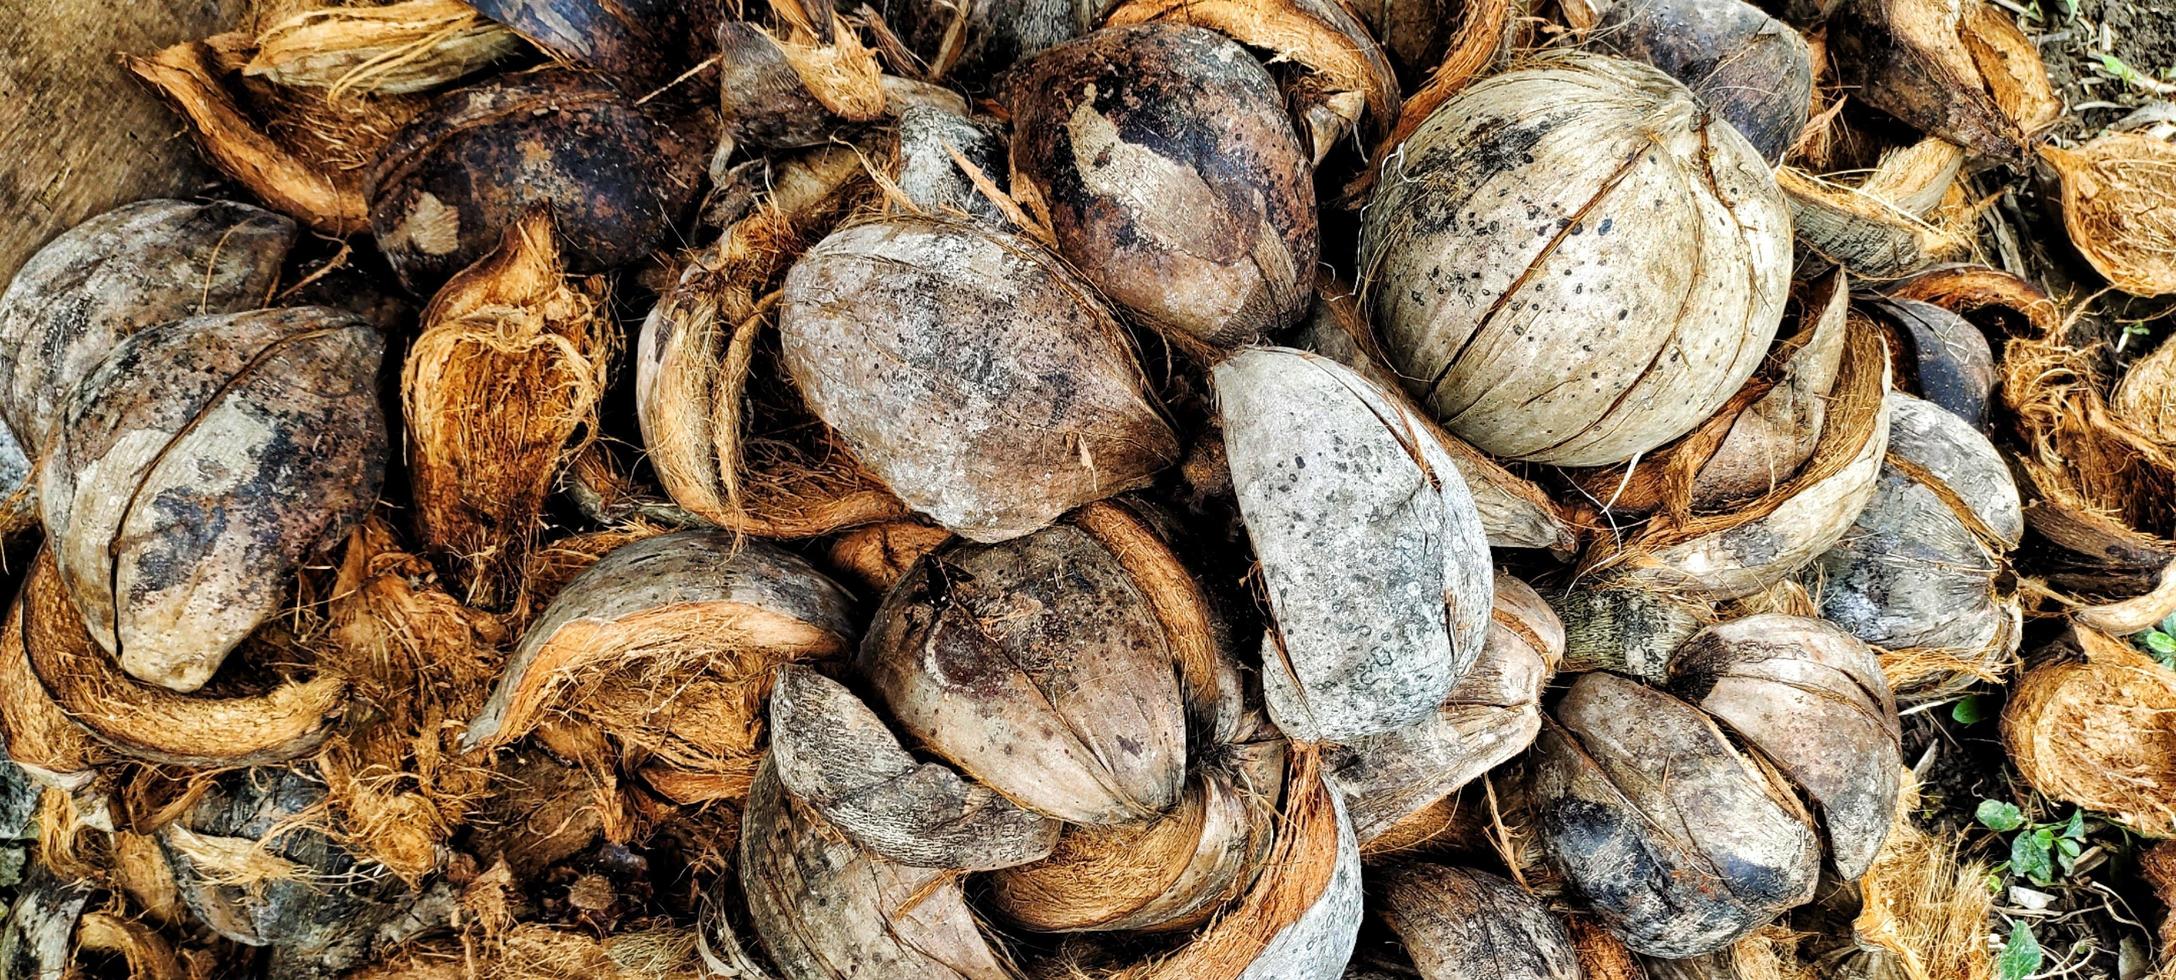 tas de coquilles sèches de noix de coco ou de cocos nucifera, vue de dessus. photo